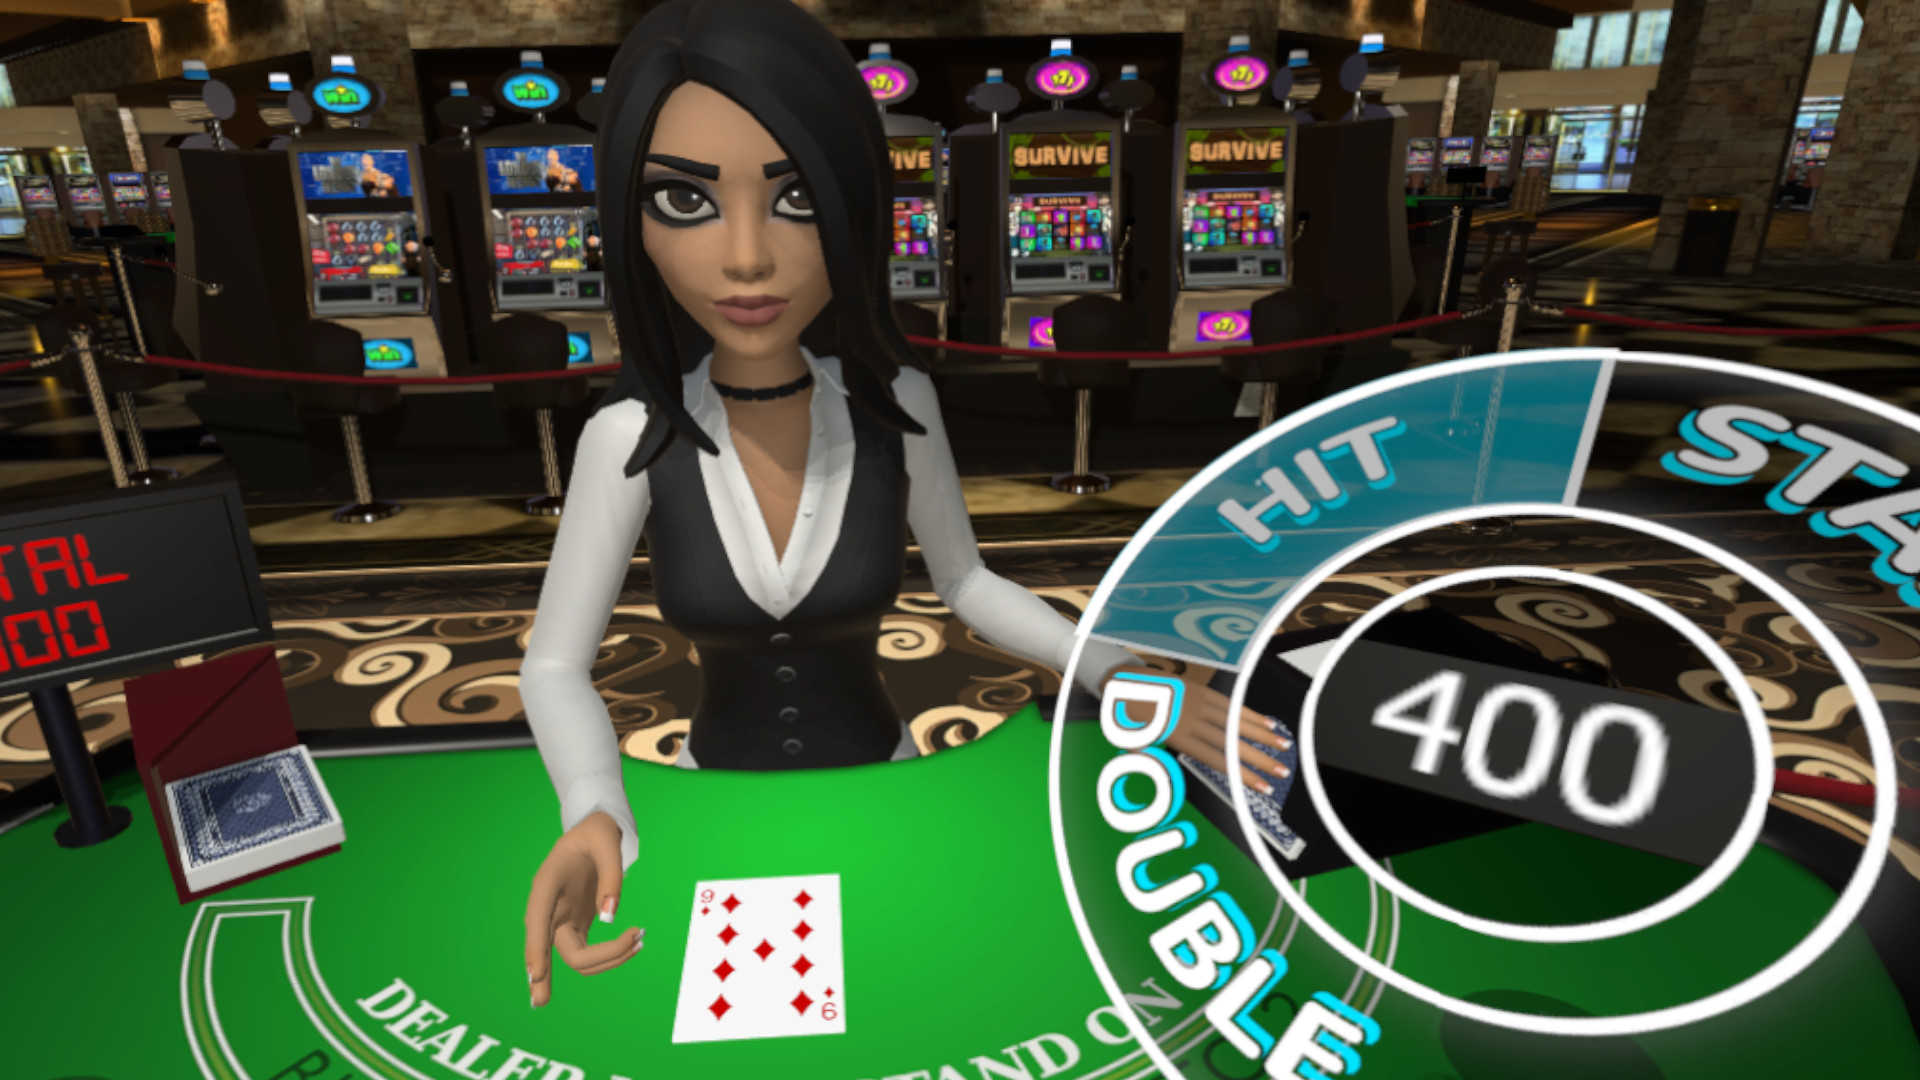 Blackjack King Offline 🕹️ Play Now on GamePix